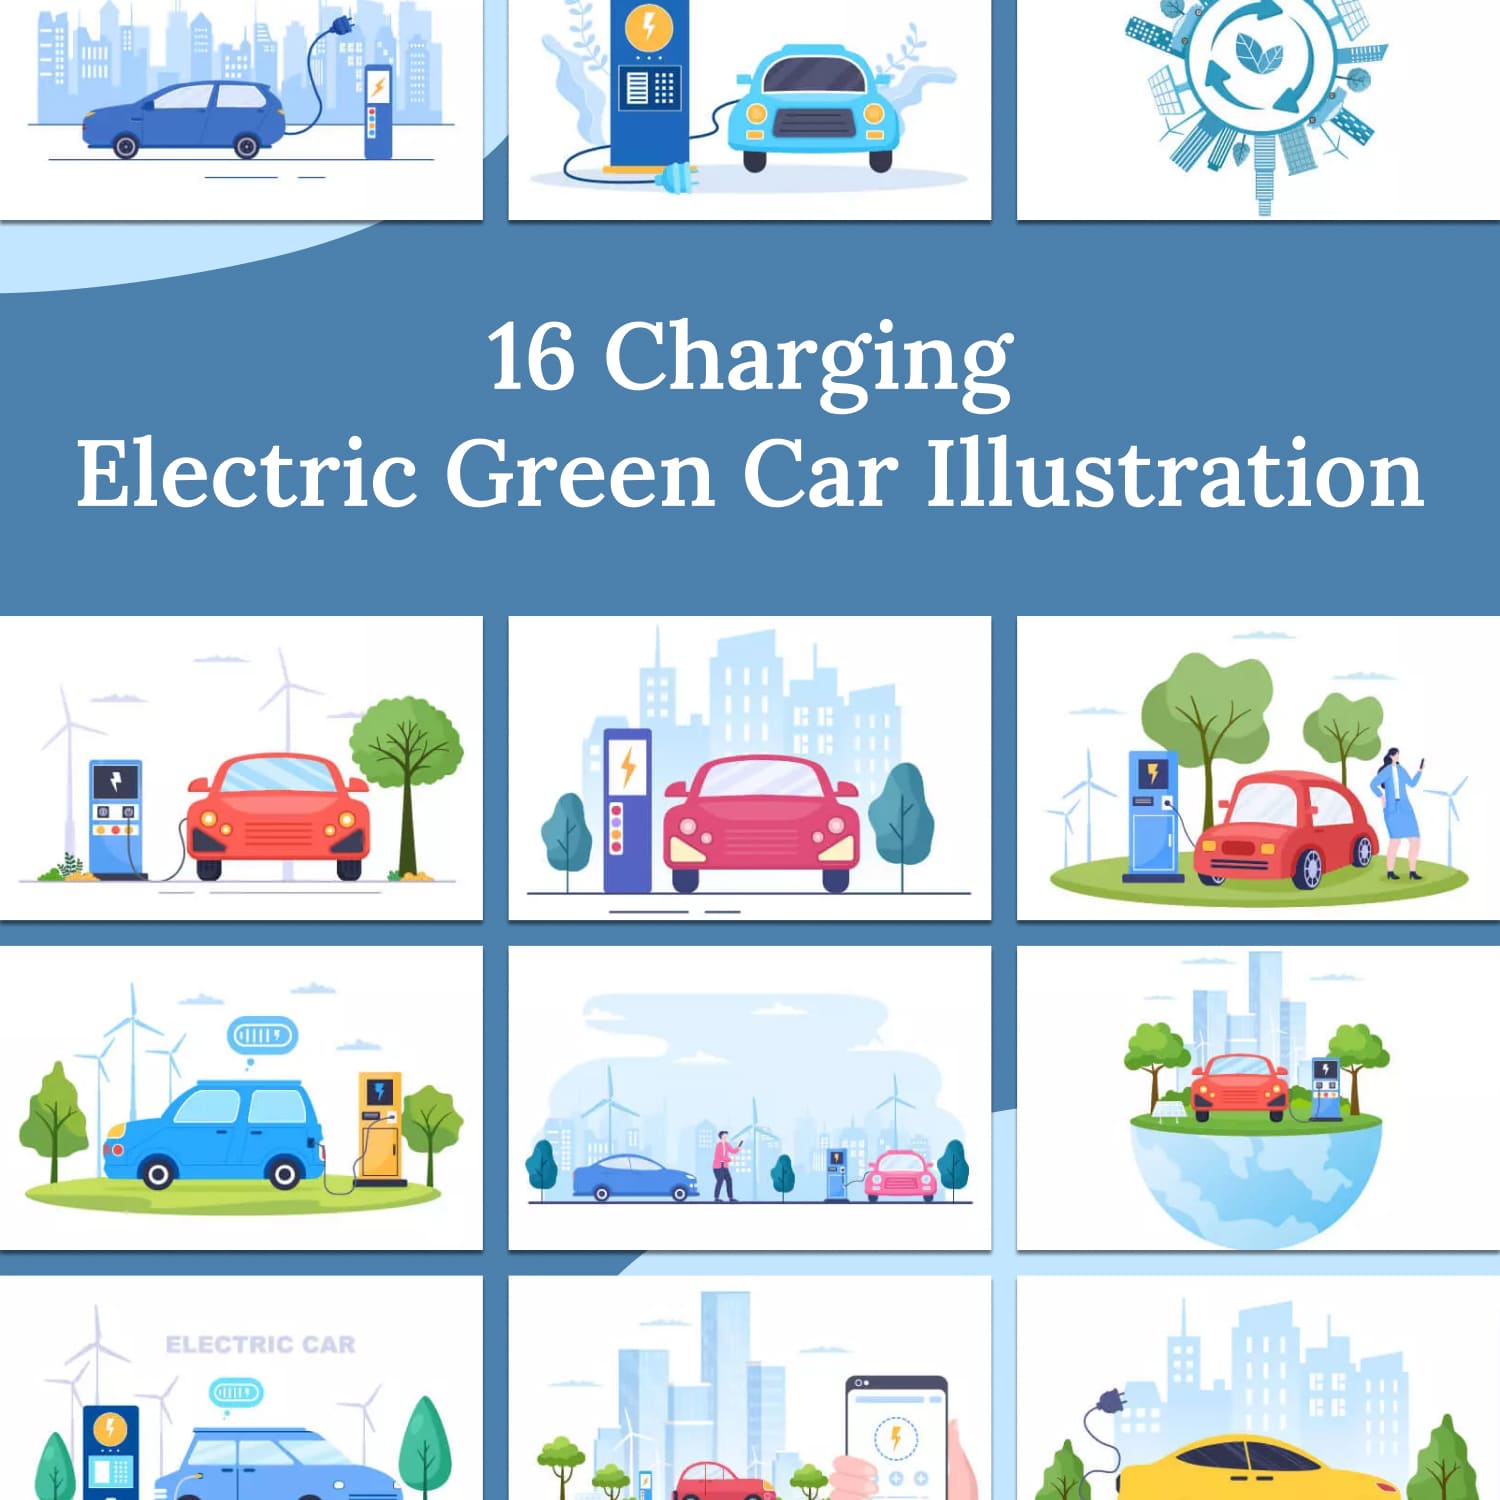 16 Charging Electric Green Car illustration.